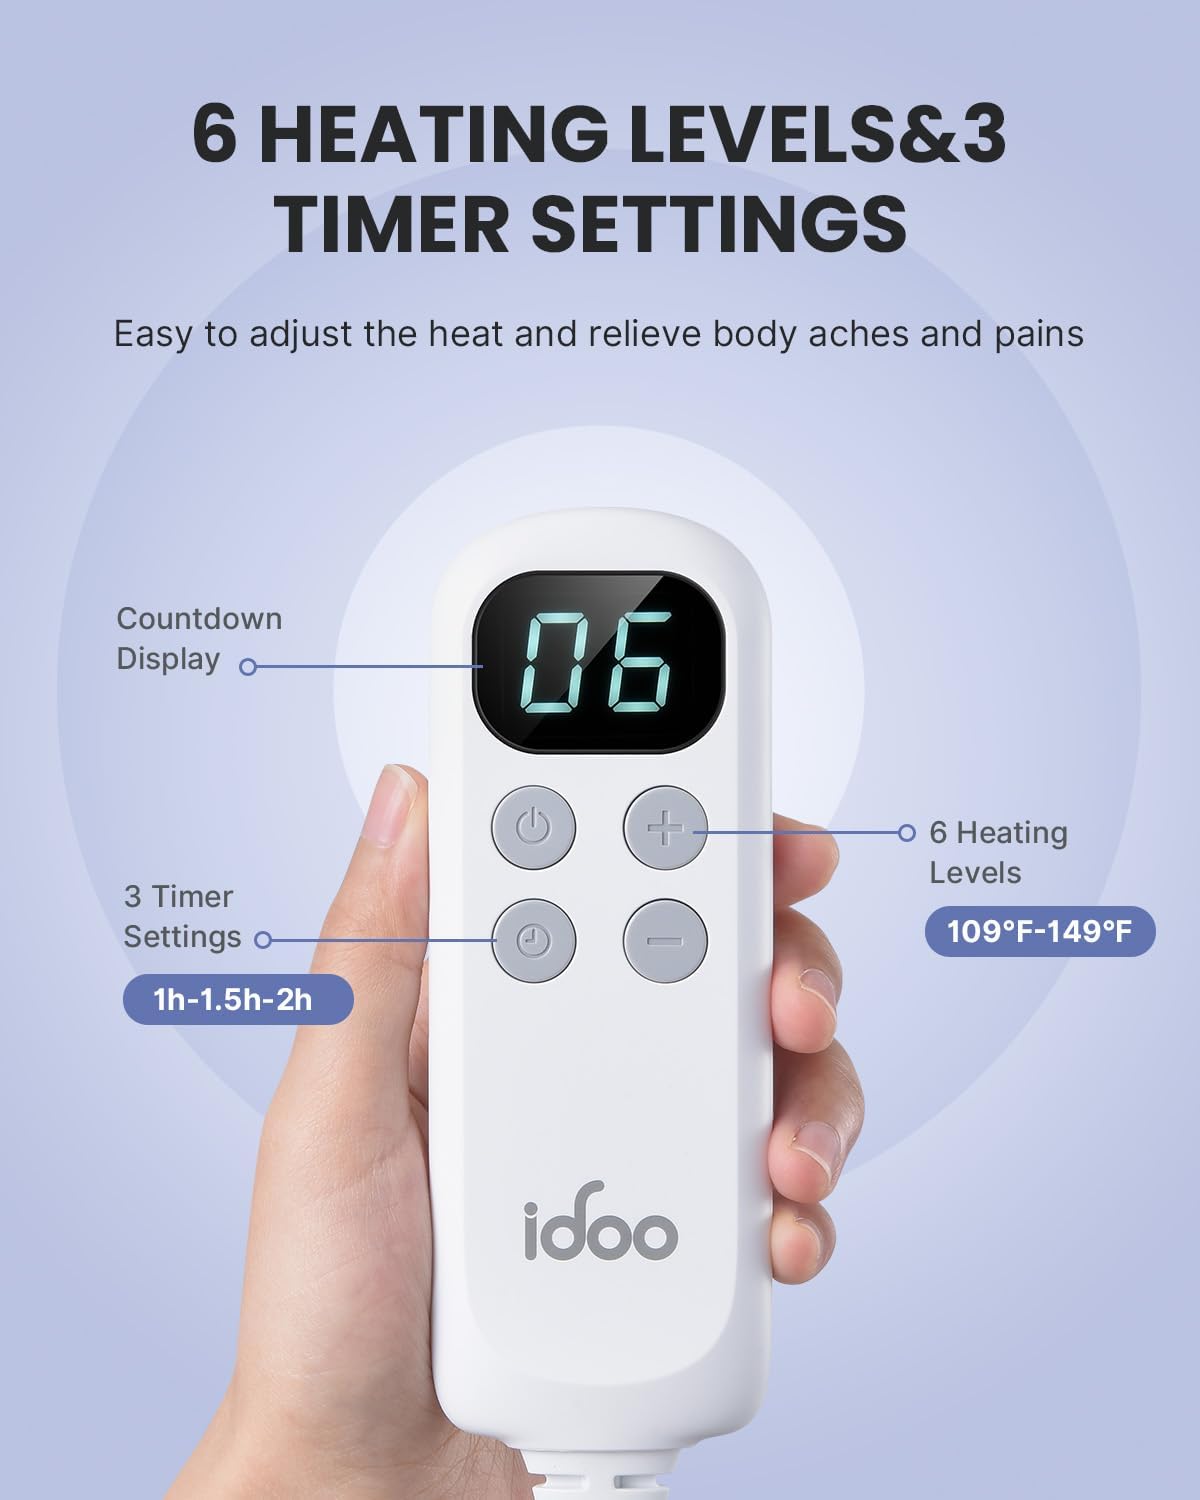 iDOO Premium XXL Heating Pad for Back Pain Relief - _wf_cus heating pad by idoo